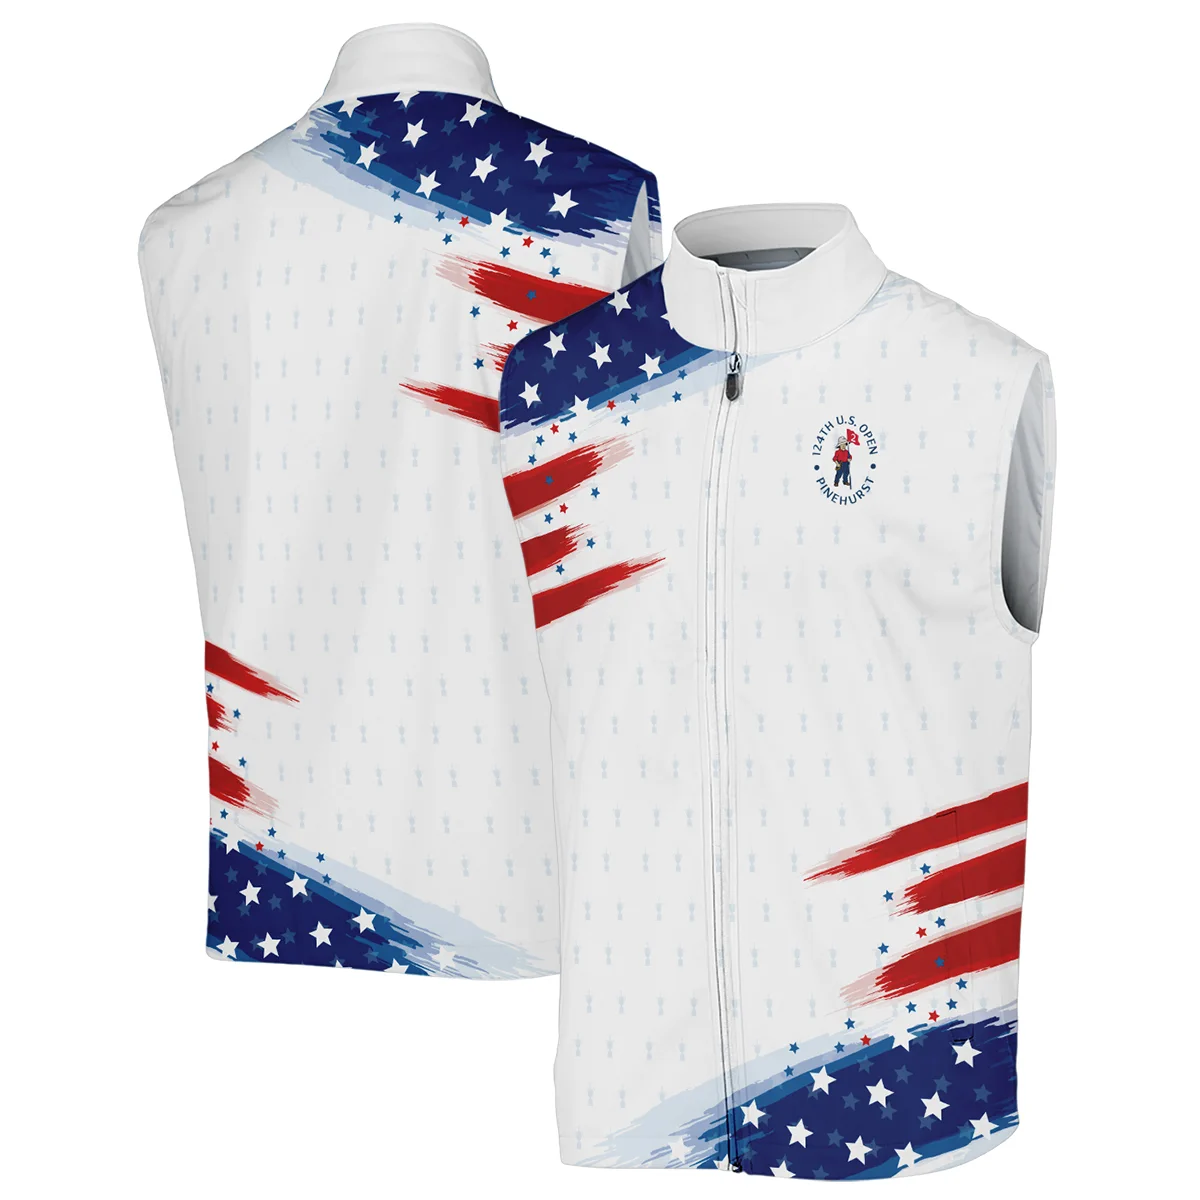 Tournament 124th U.S. Open Pinehurst Ping Zipper Hoodie Shirt Flag American White And Blue All Over Print Zipper Hoodie Shirt